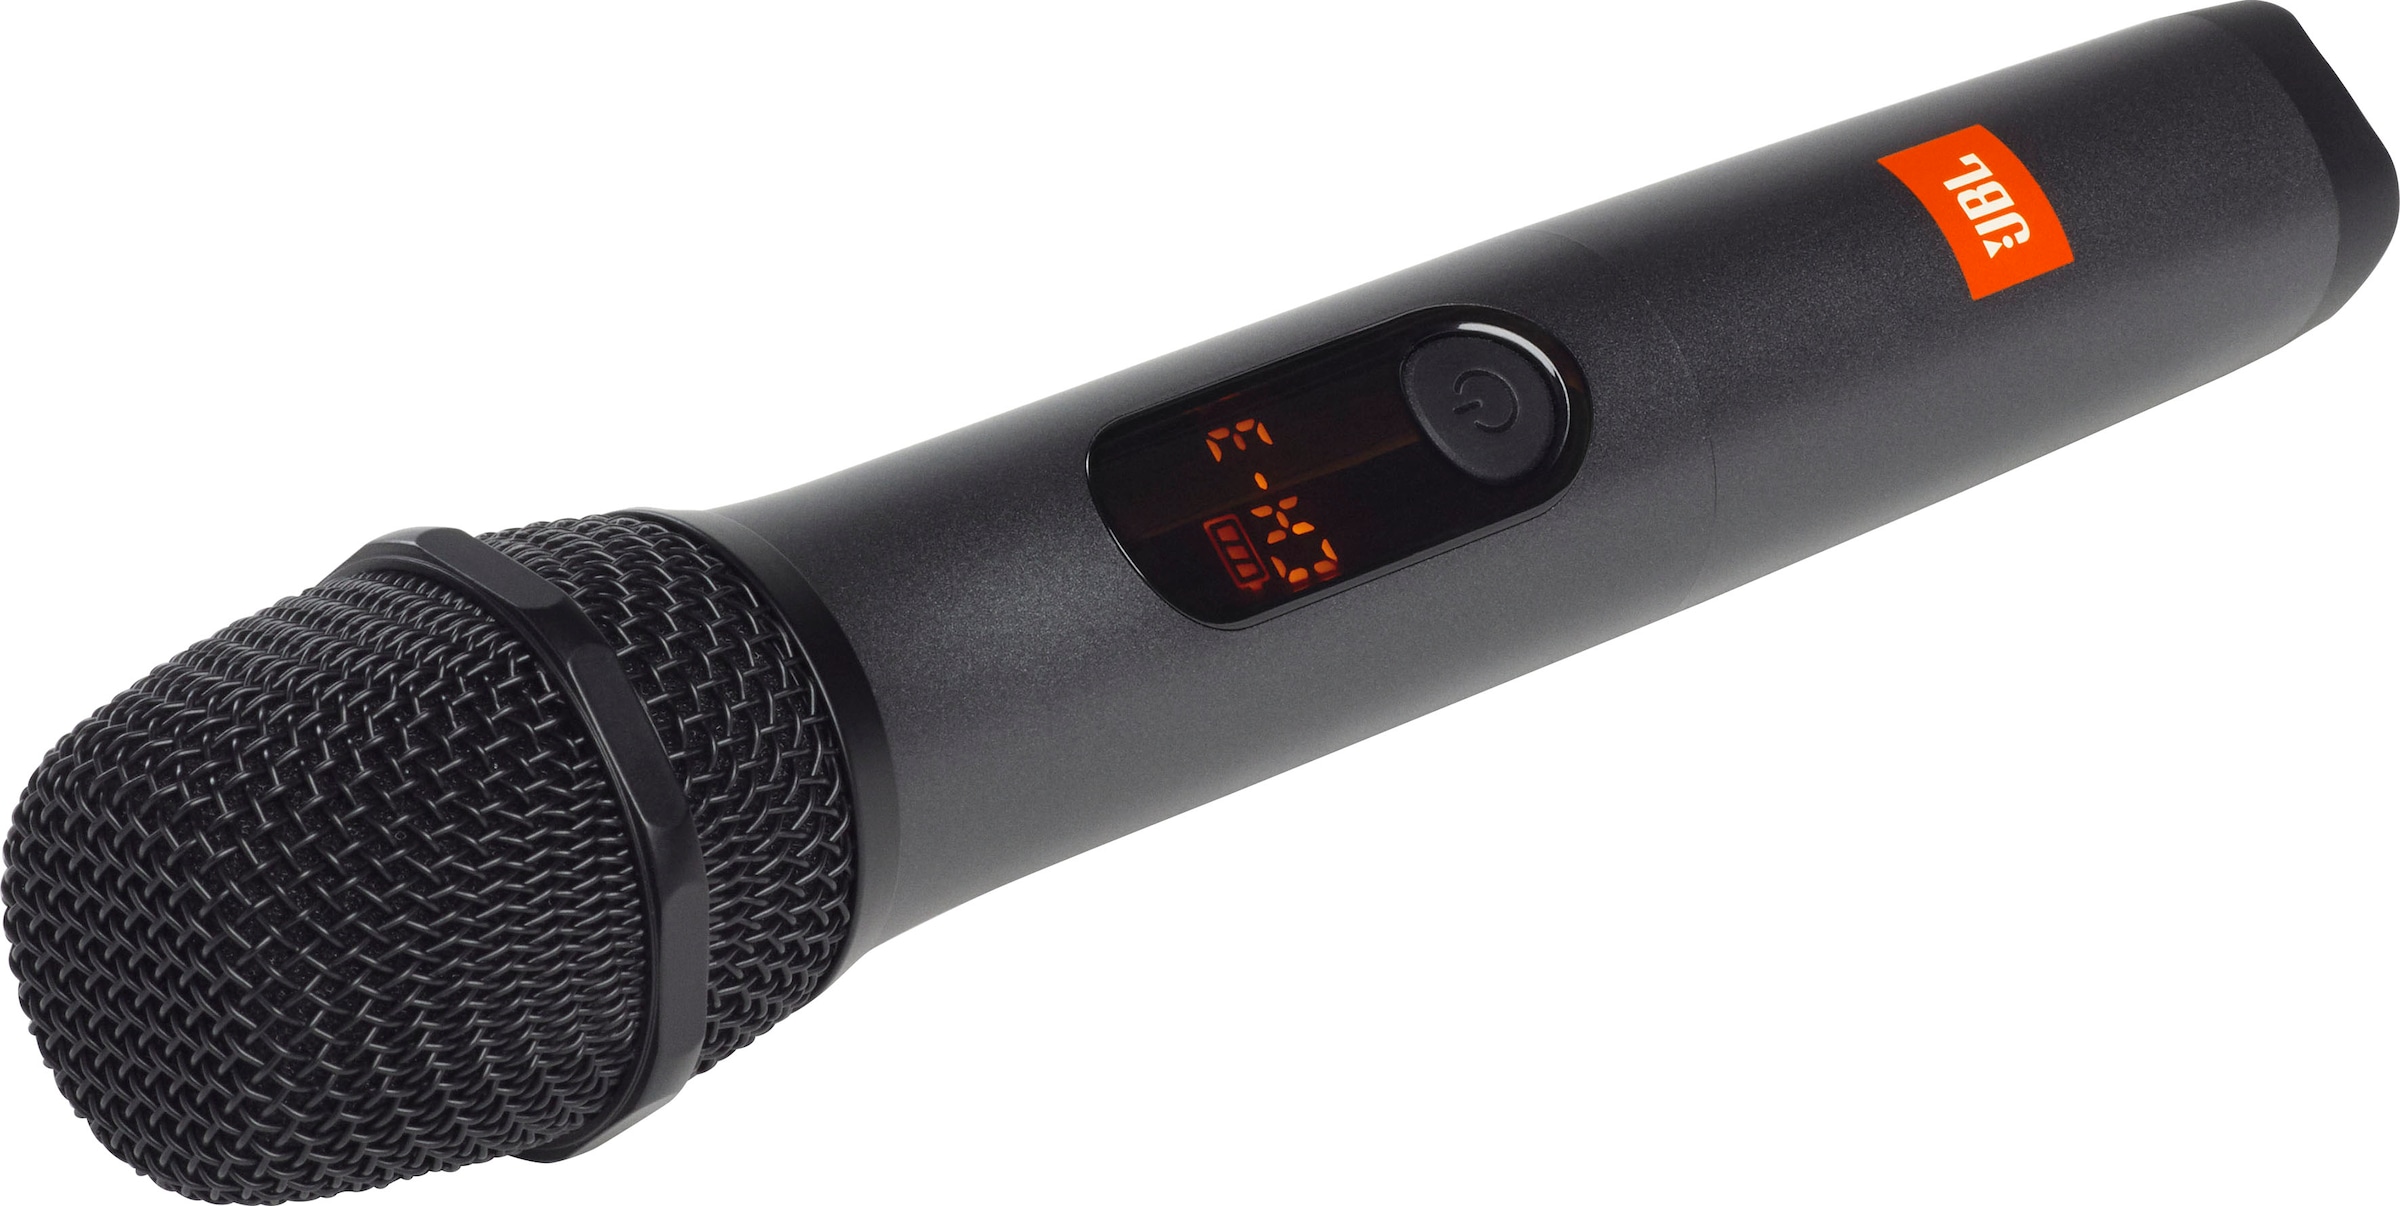 JBL Mikrofon »wireless Microphone«, (Set), 2 Mikrofone und 1 Dongle